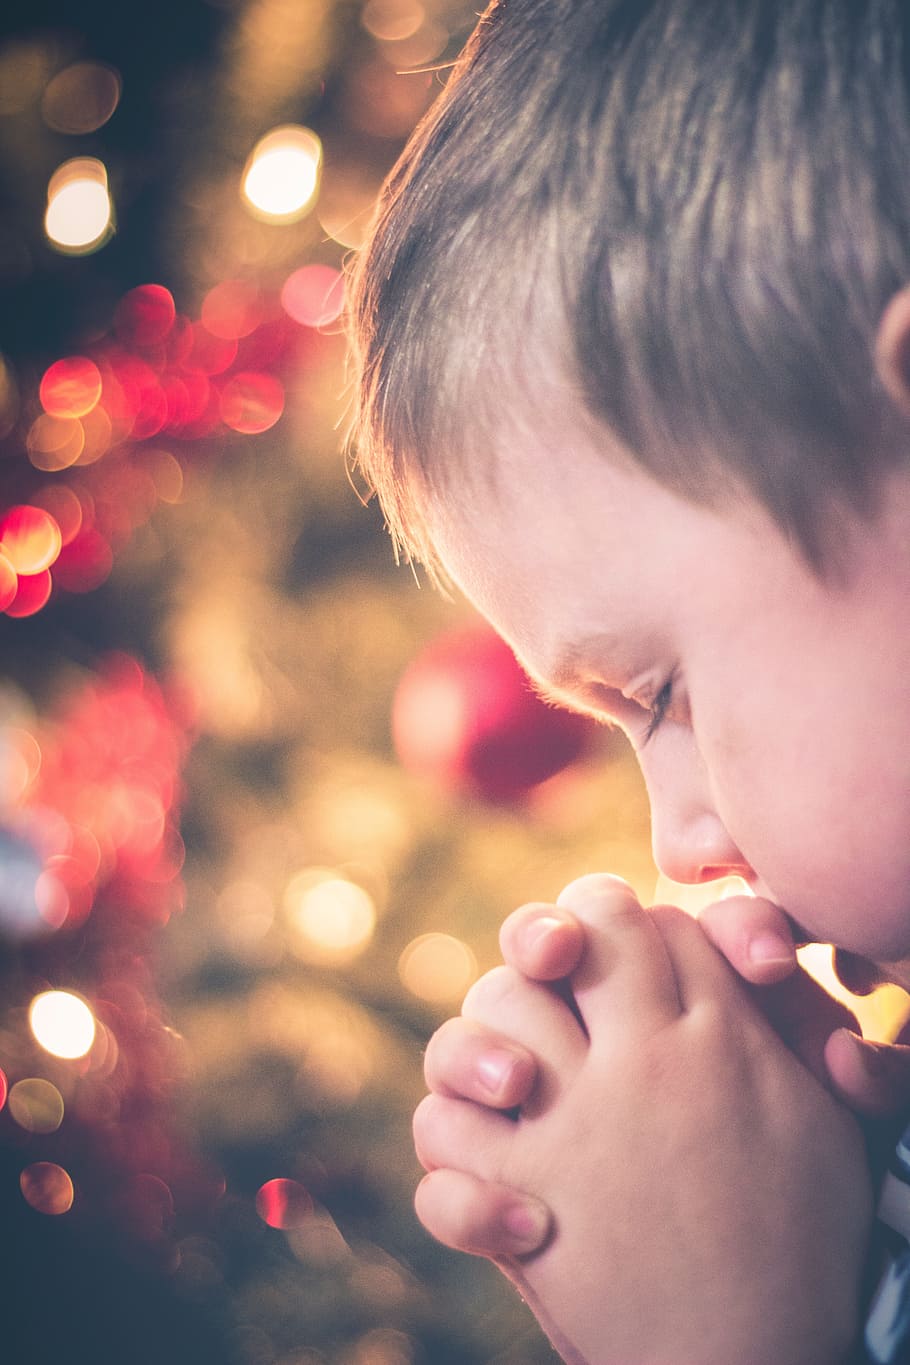 child prayer background